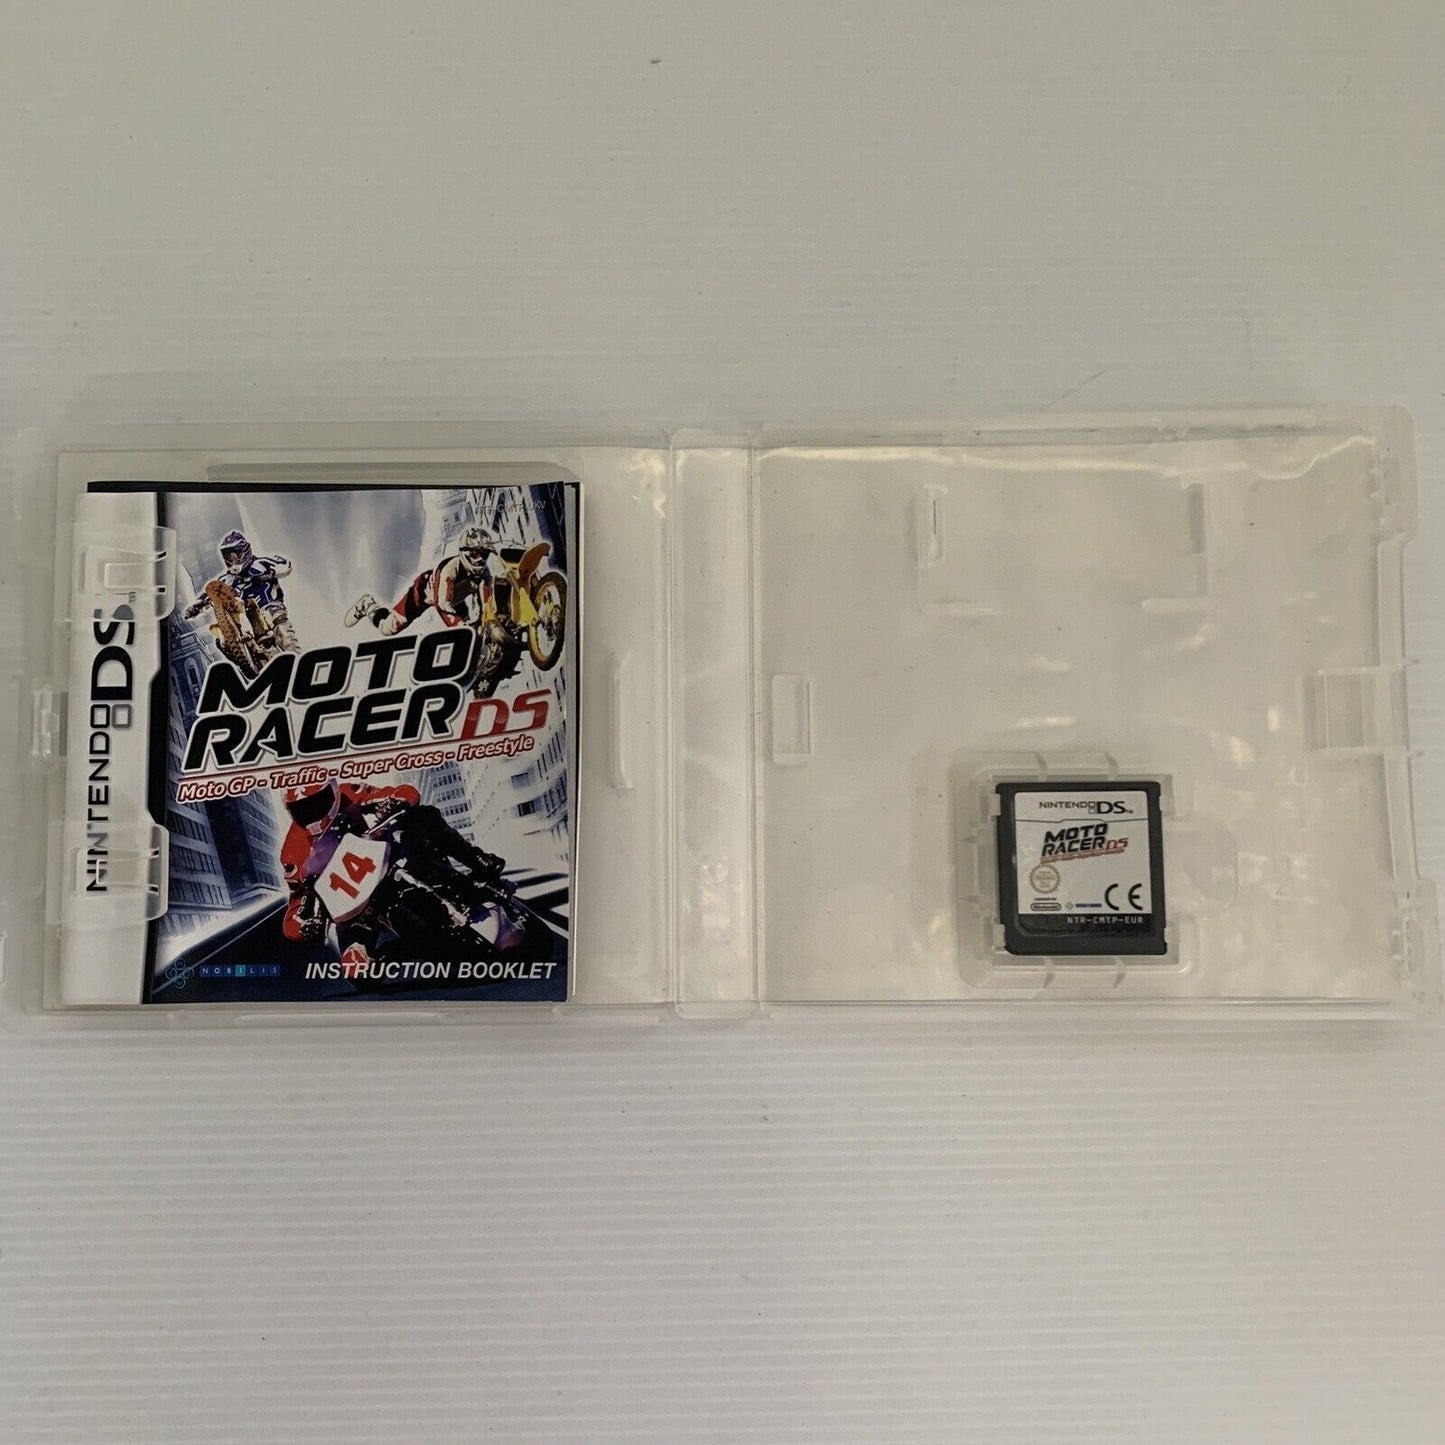 Moto Racer DS Moto GP - Traffic - Super Cross - Freestyle Game  Nintendo DS